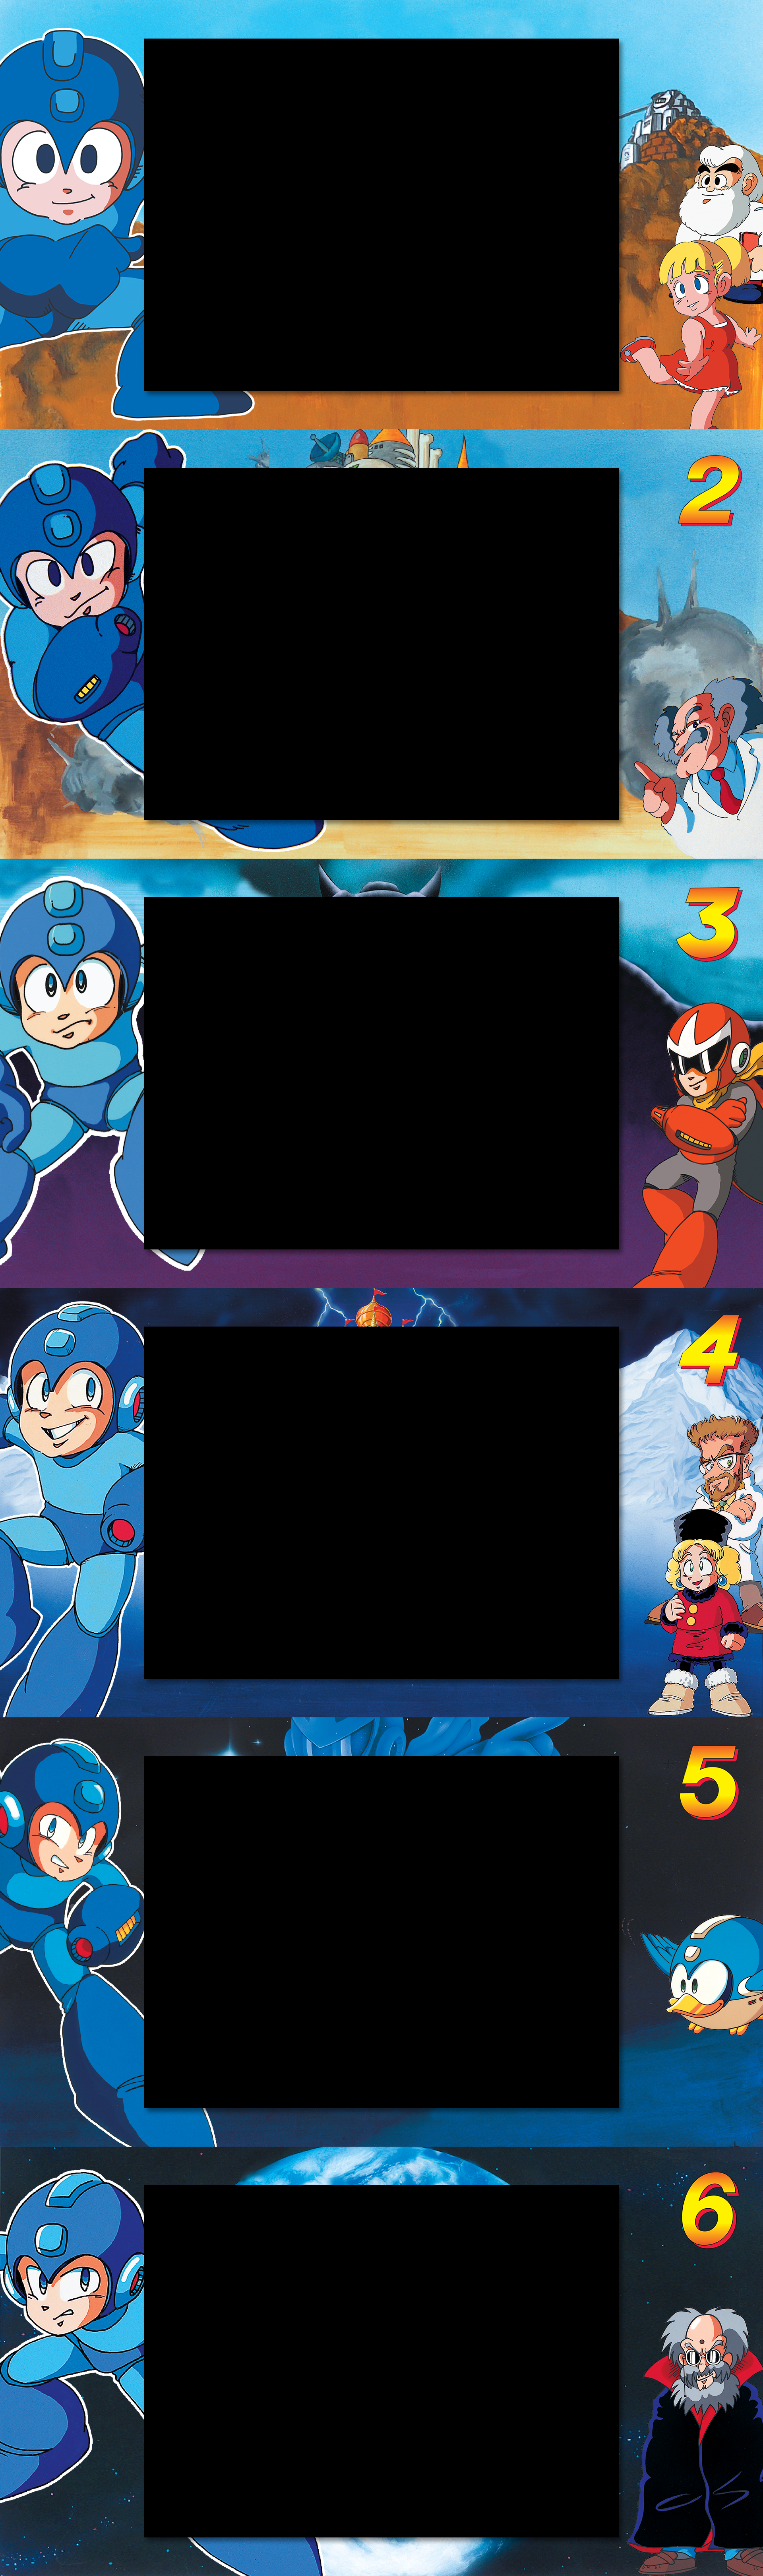 Mega Man Legacy Collection - Game Borders